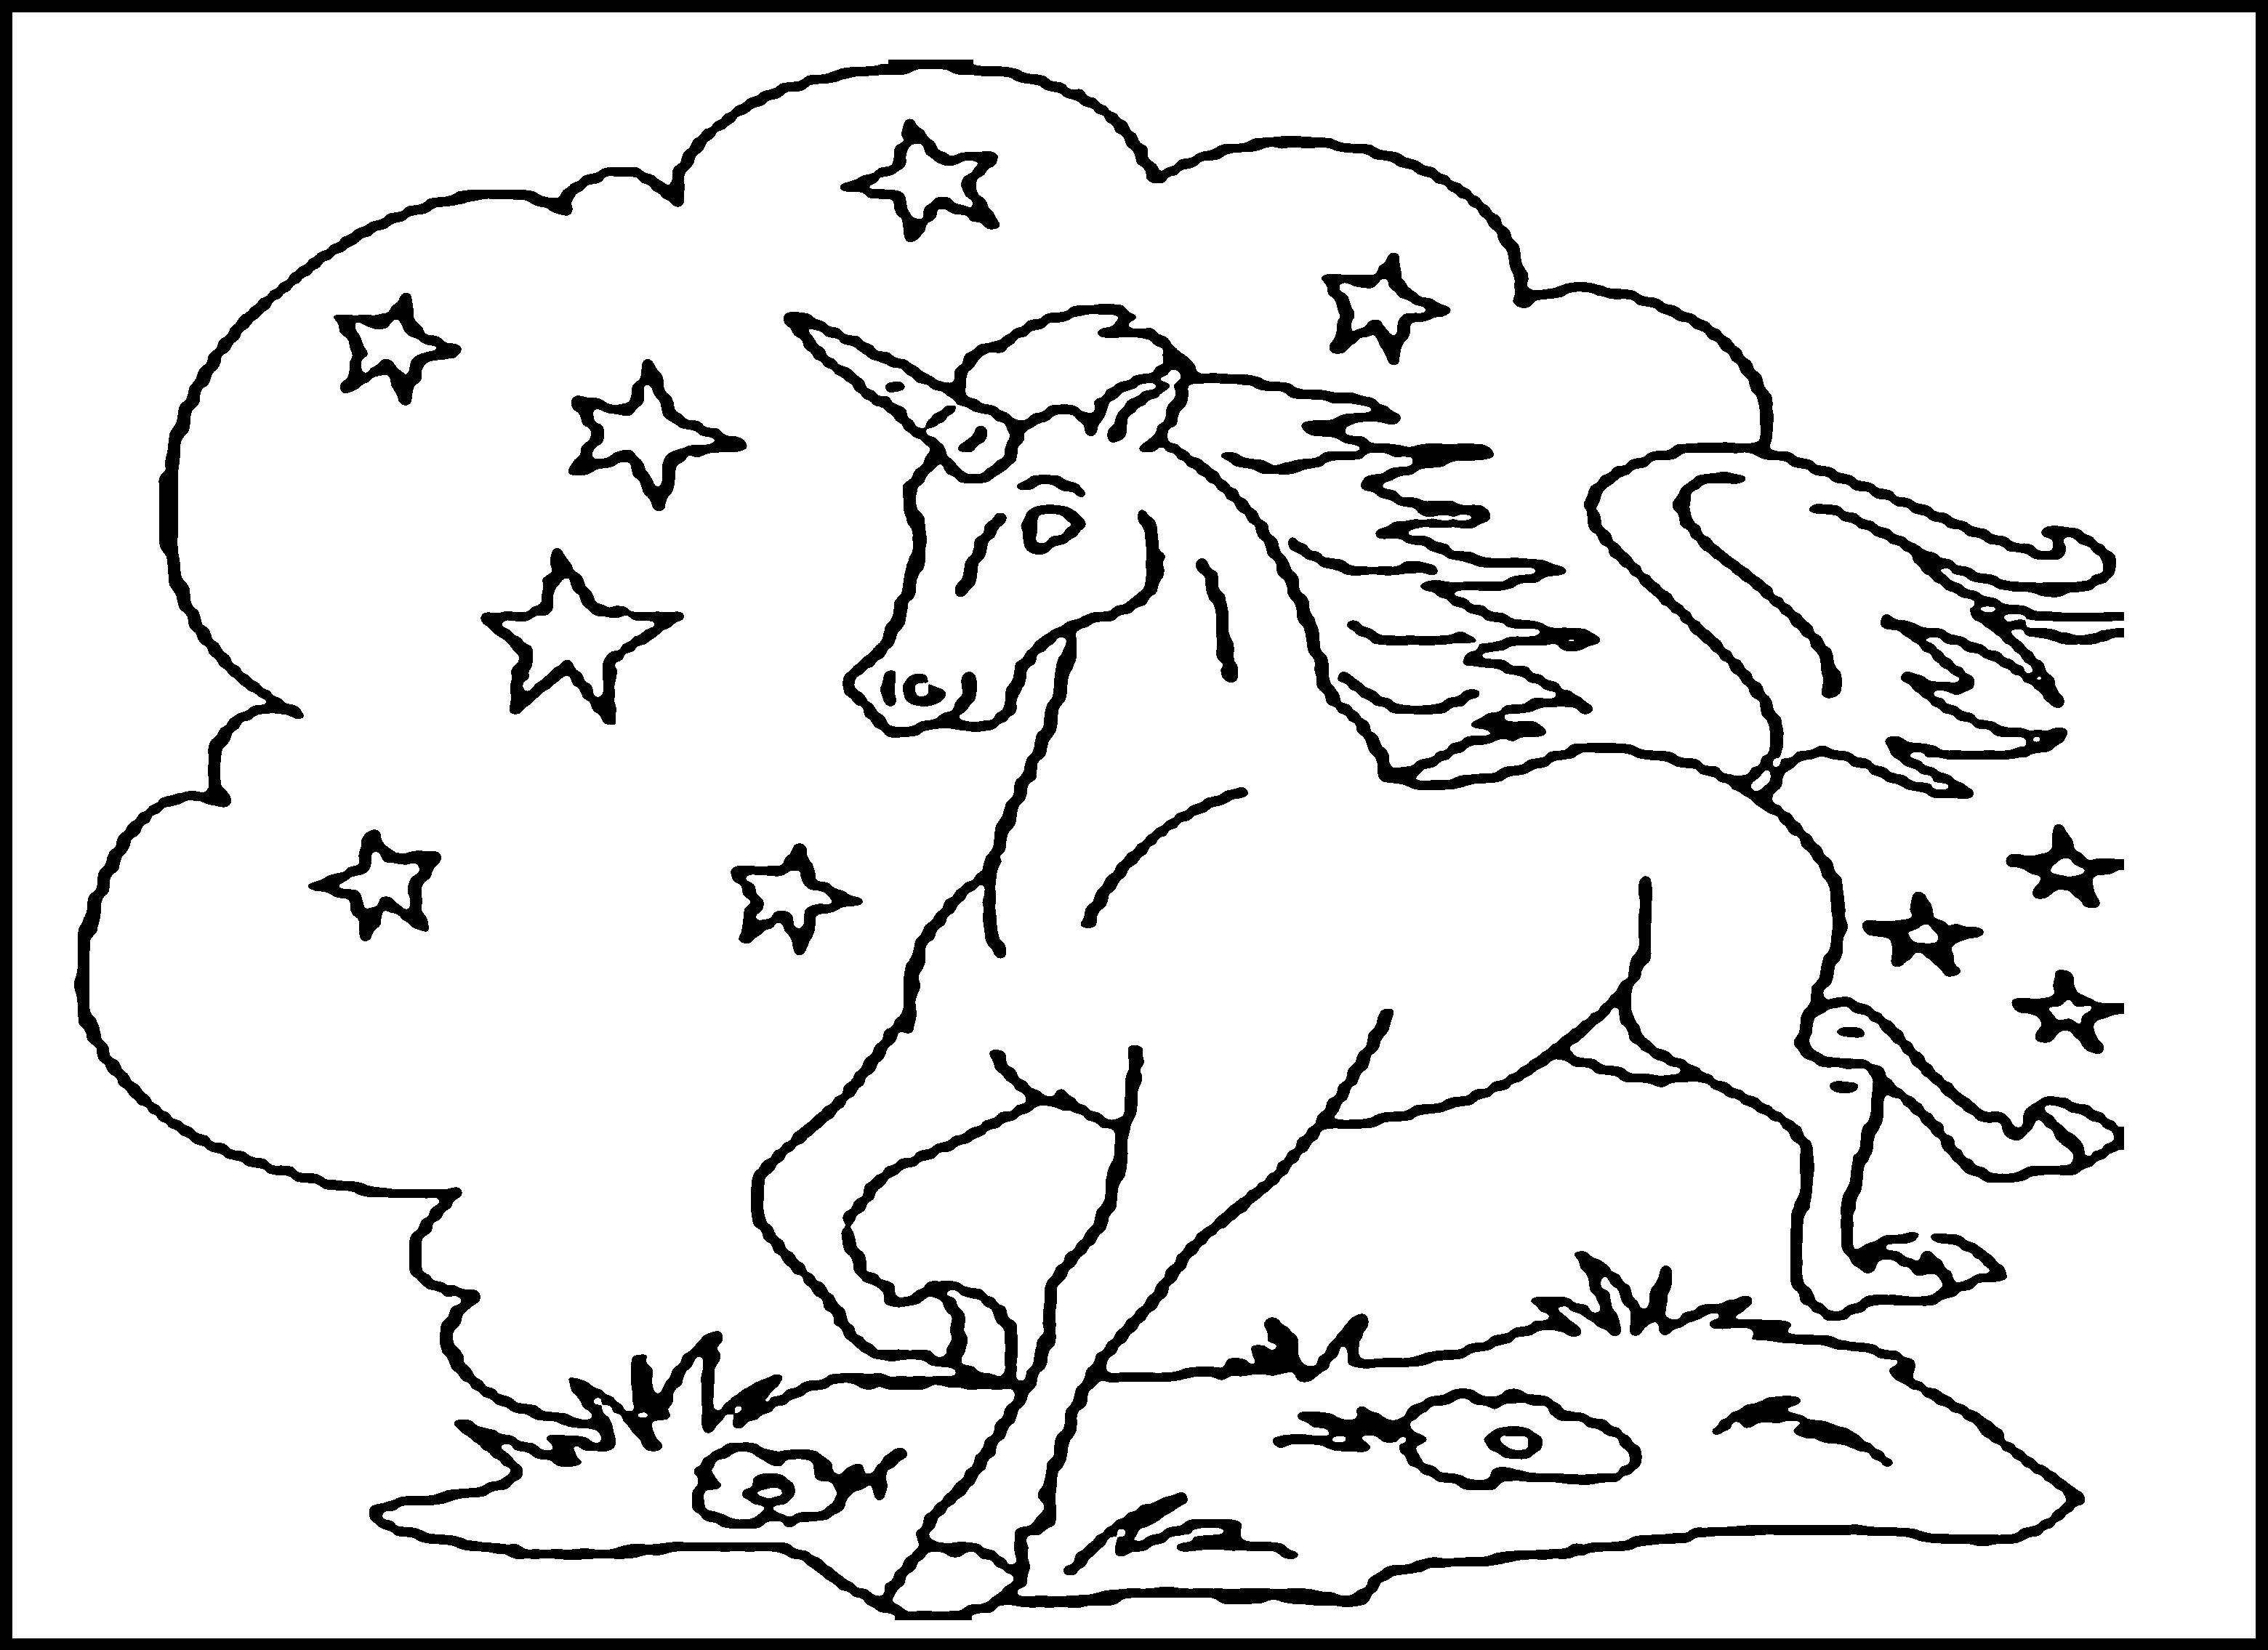 Coloring Wonderful unicorn. Category Animals. Tags:  Animals, unicorn.